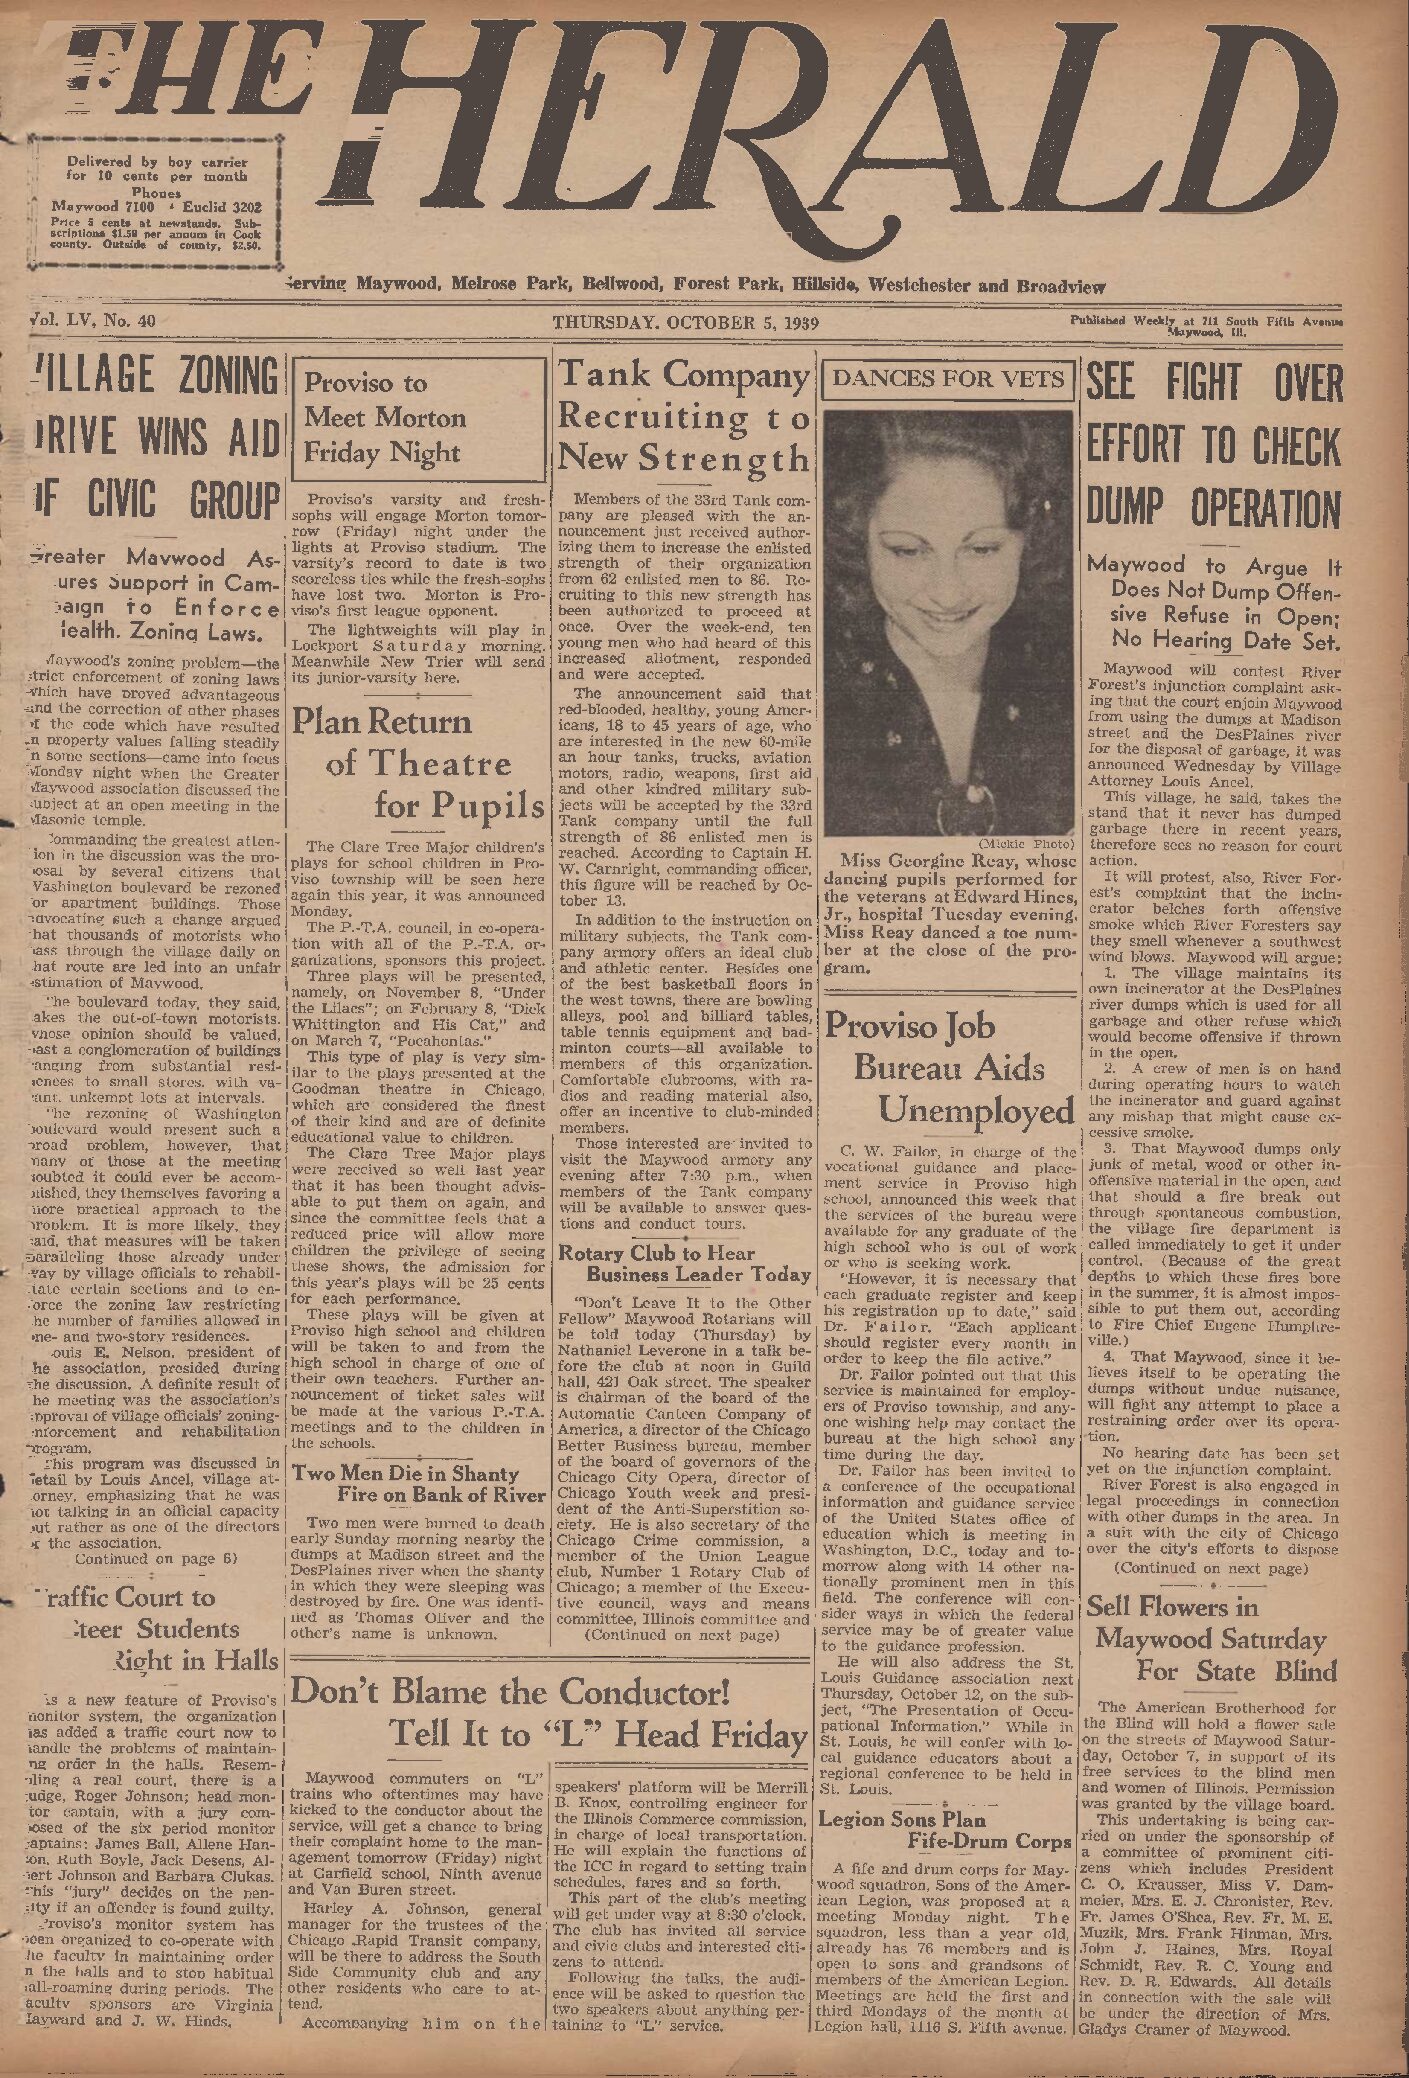 The Herald – 19391005